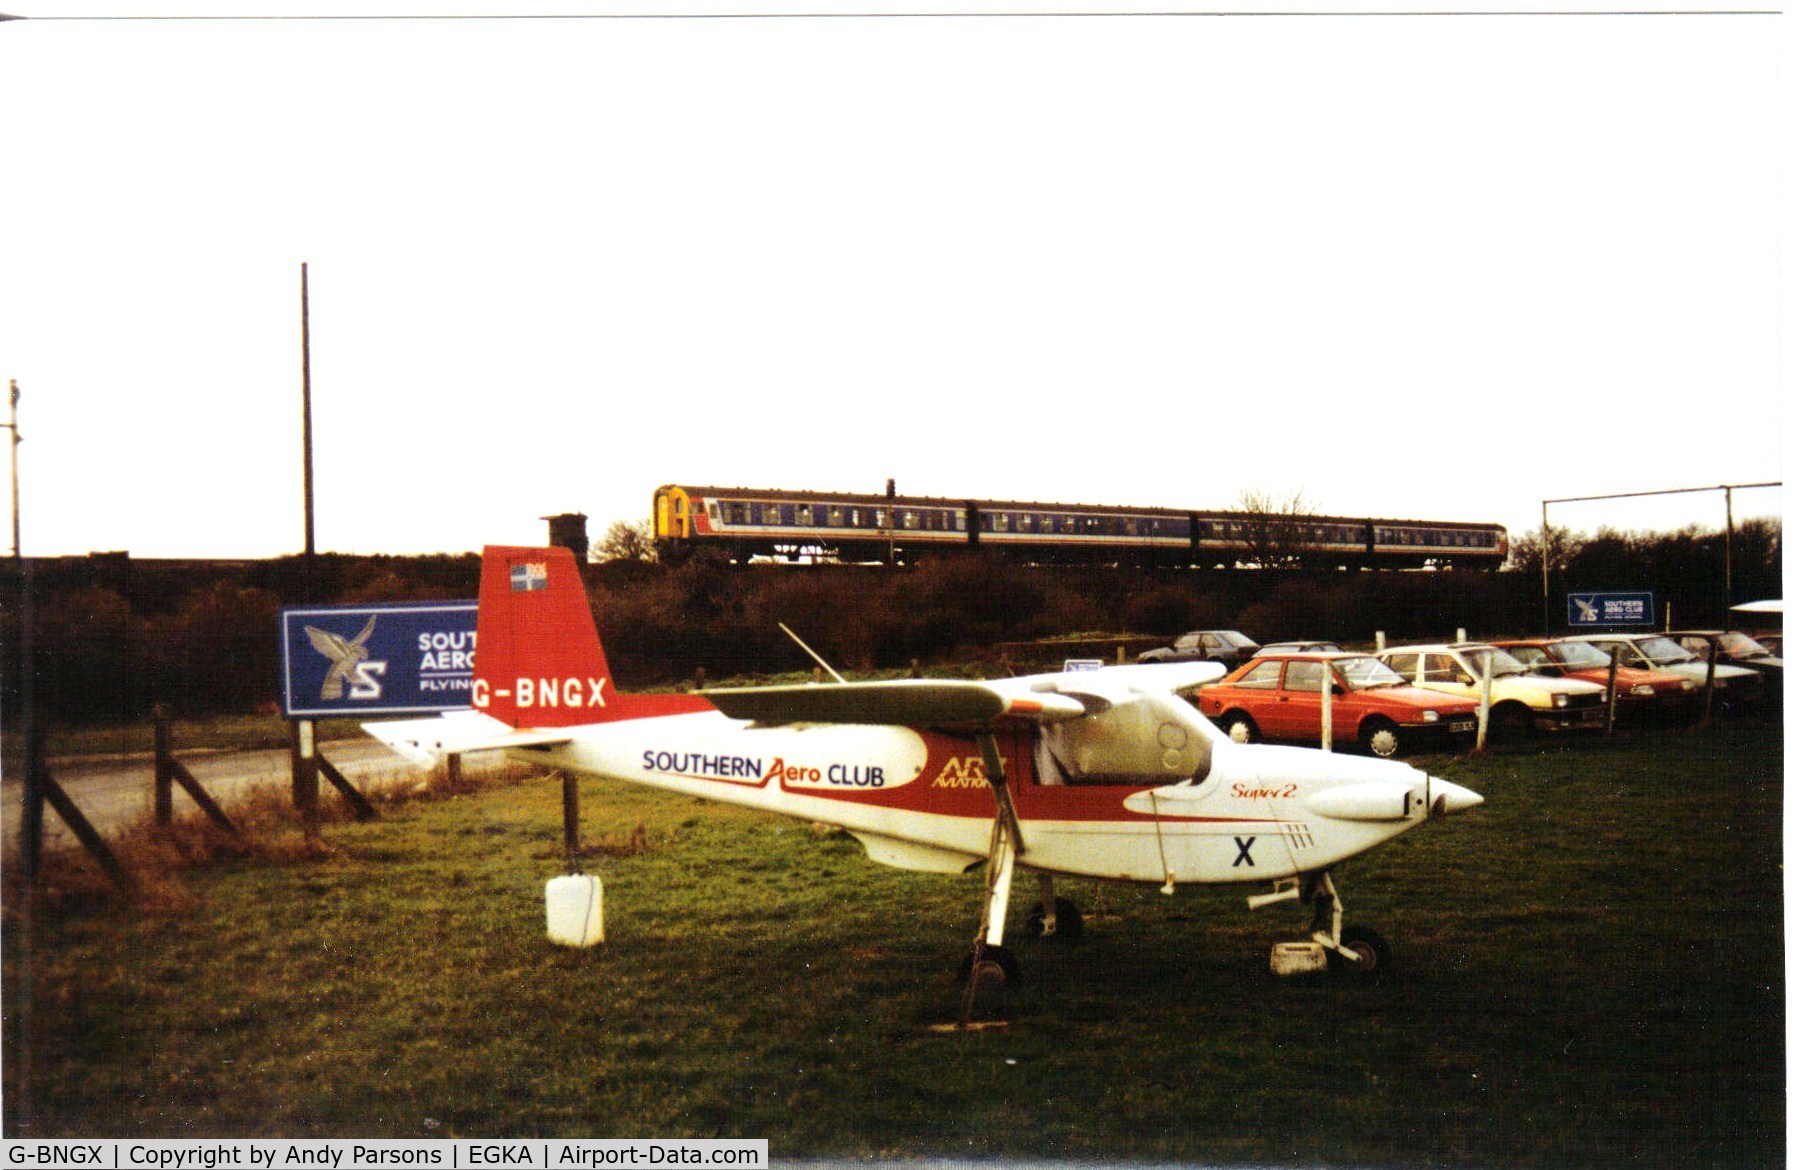 G-BNGX, 1986 ARV ARV1 Super 2 C/N 023, Southern Aero Club at Shoreham operated  3 arv